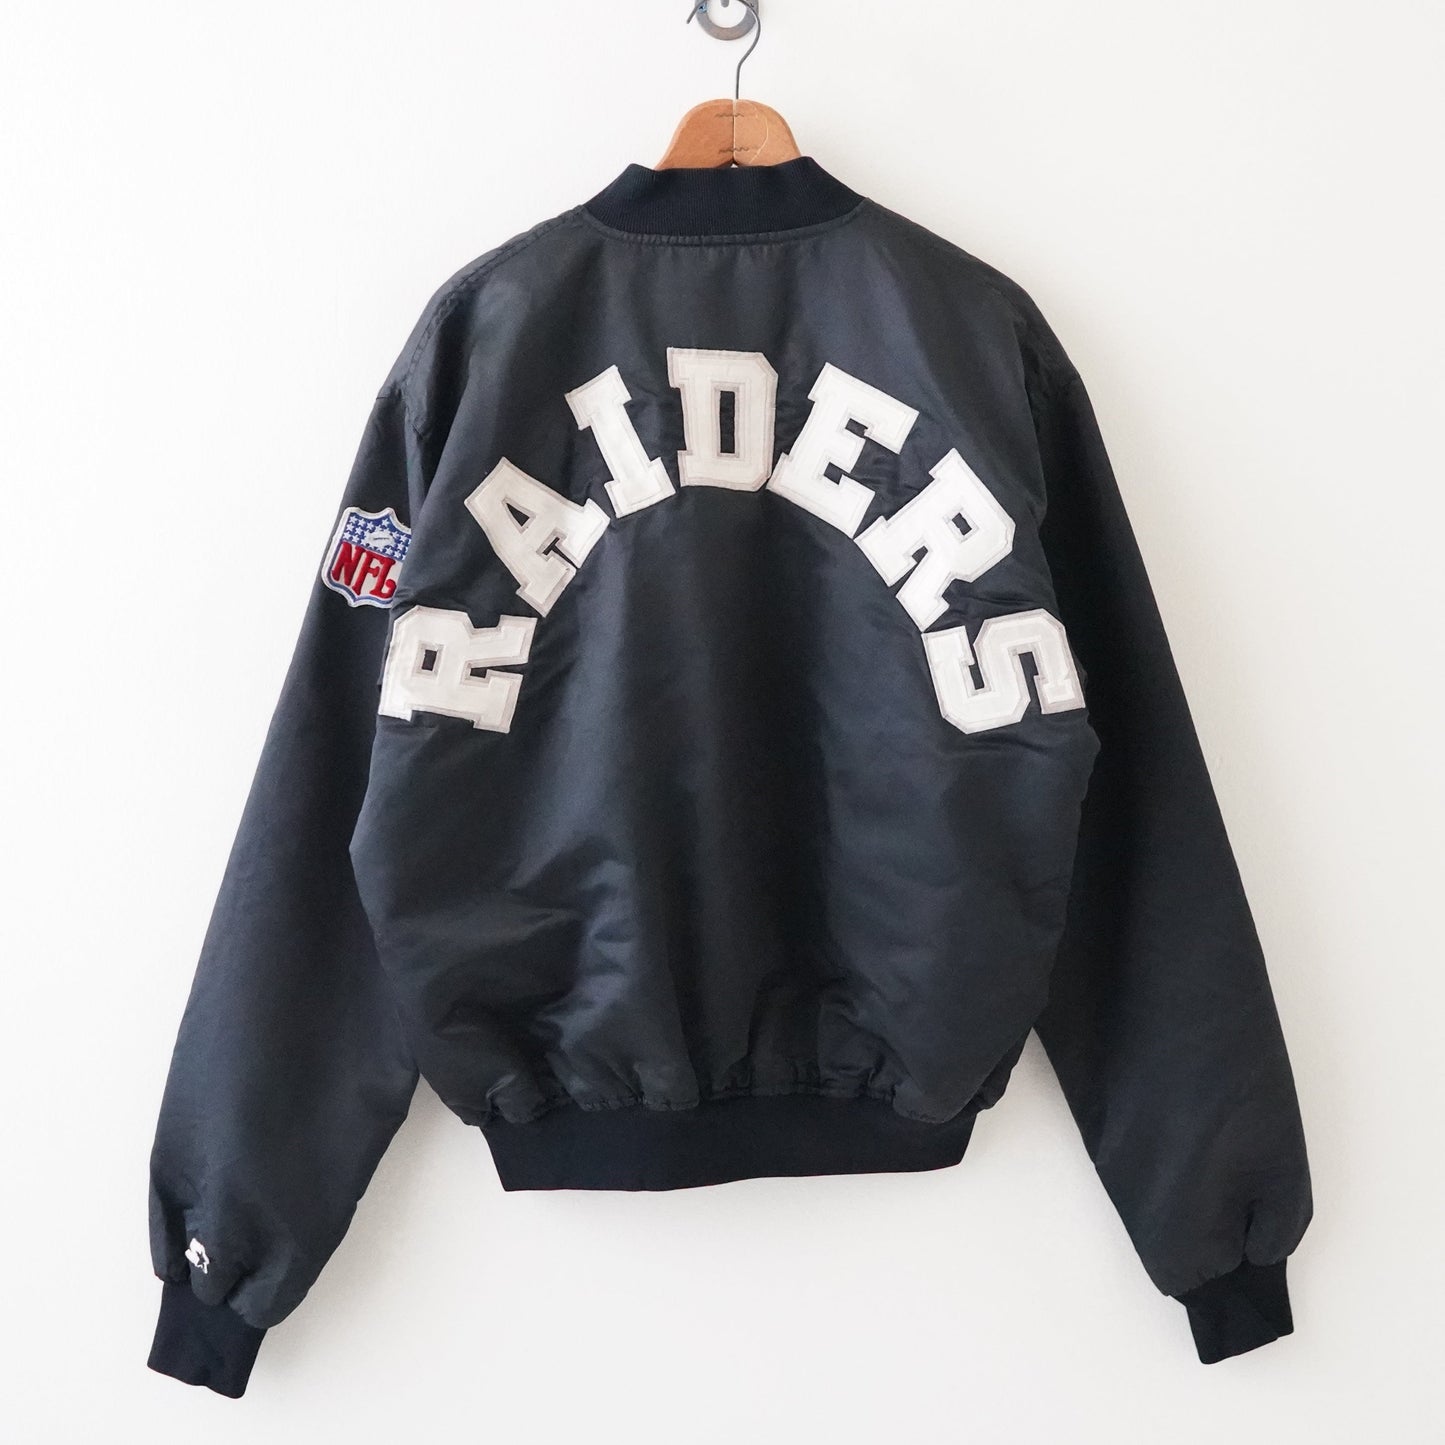 80s NFL by Starter bomber jacket